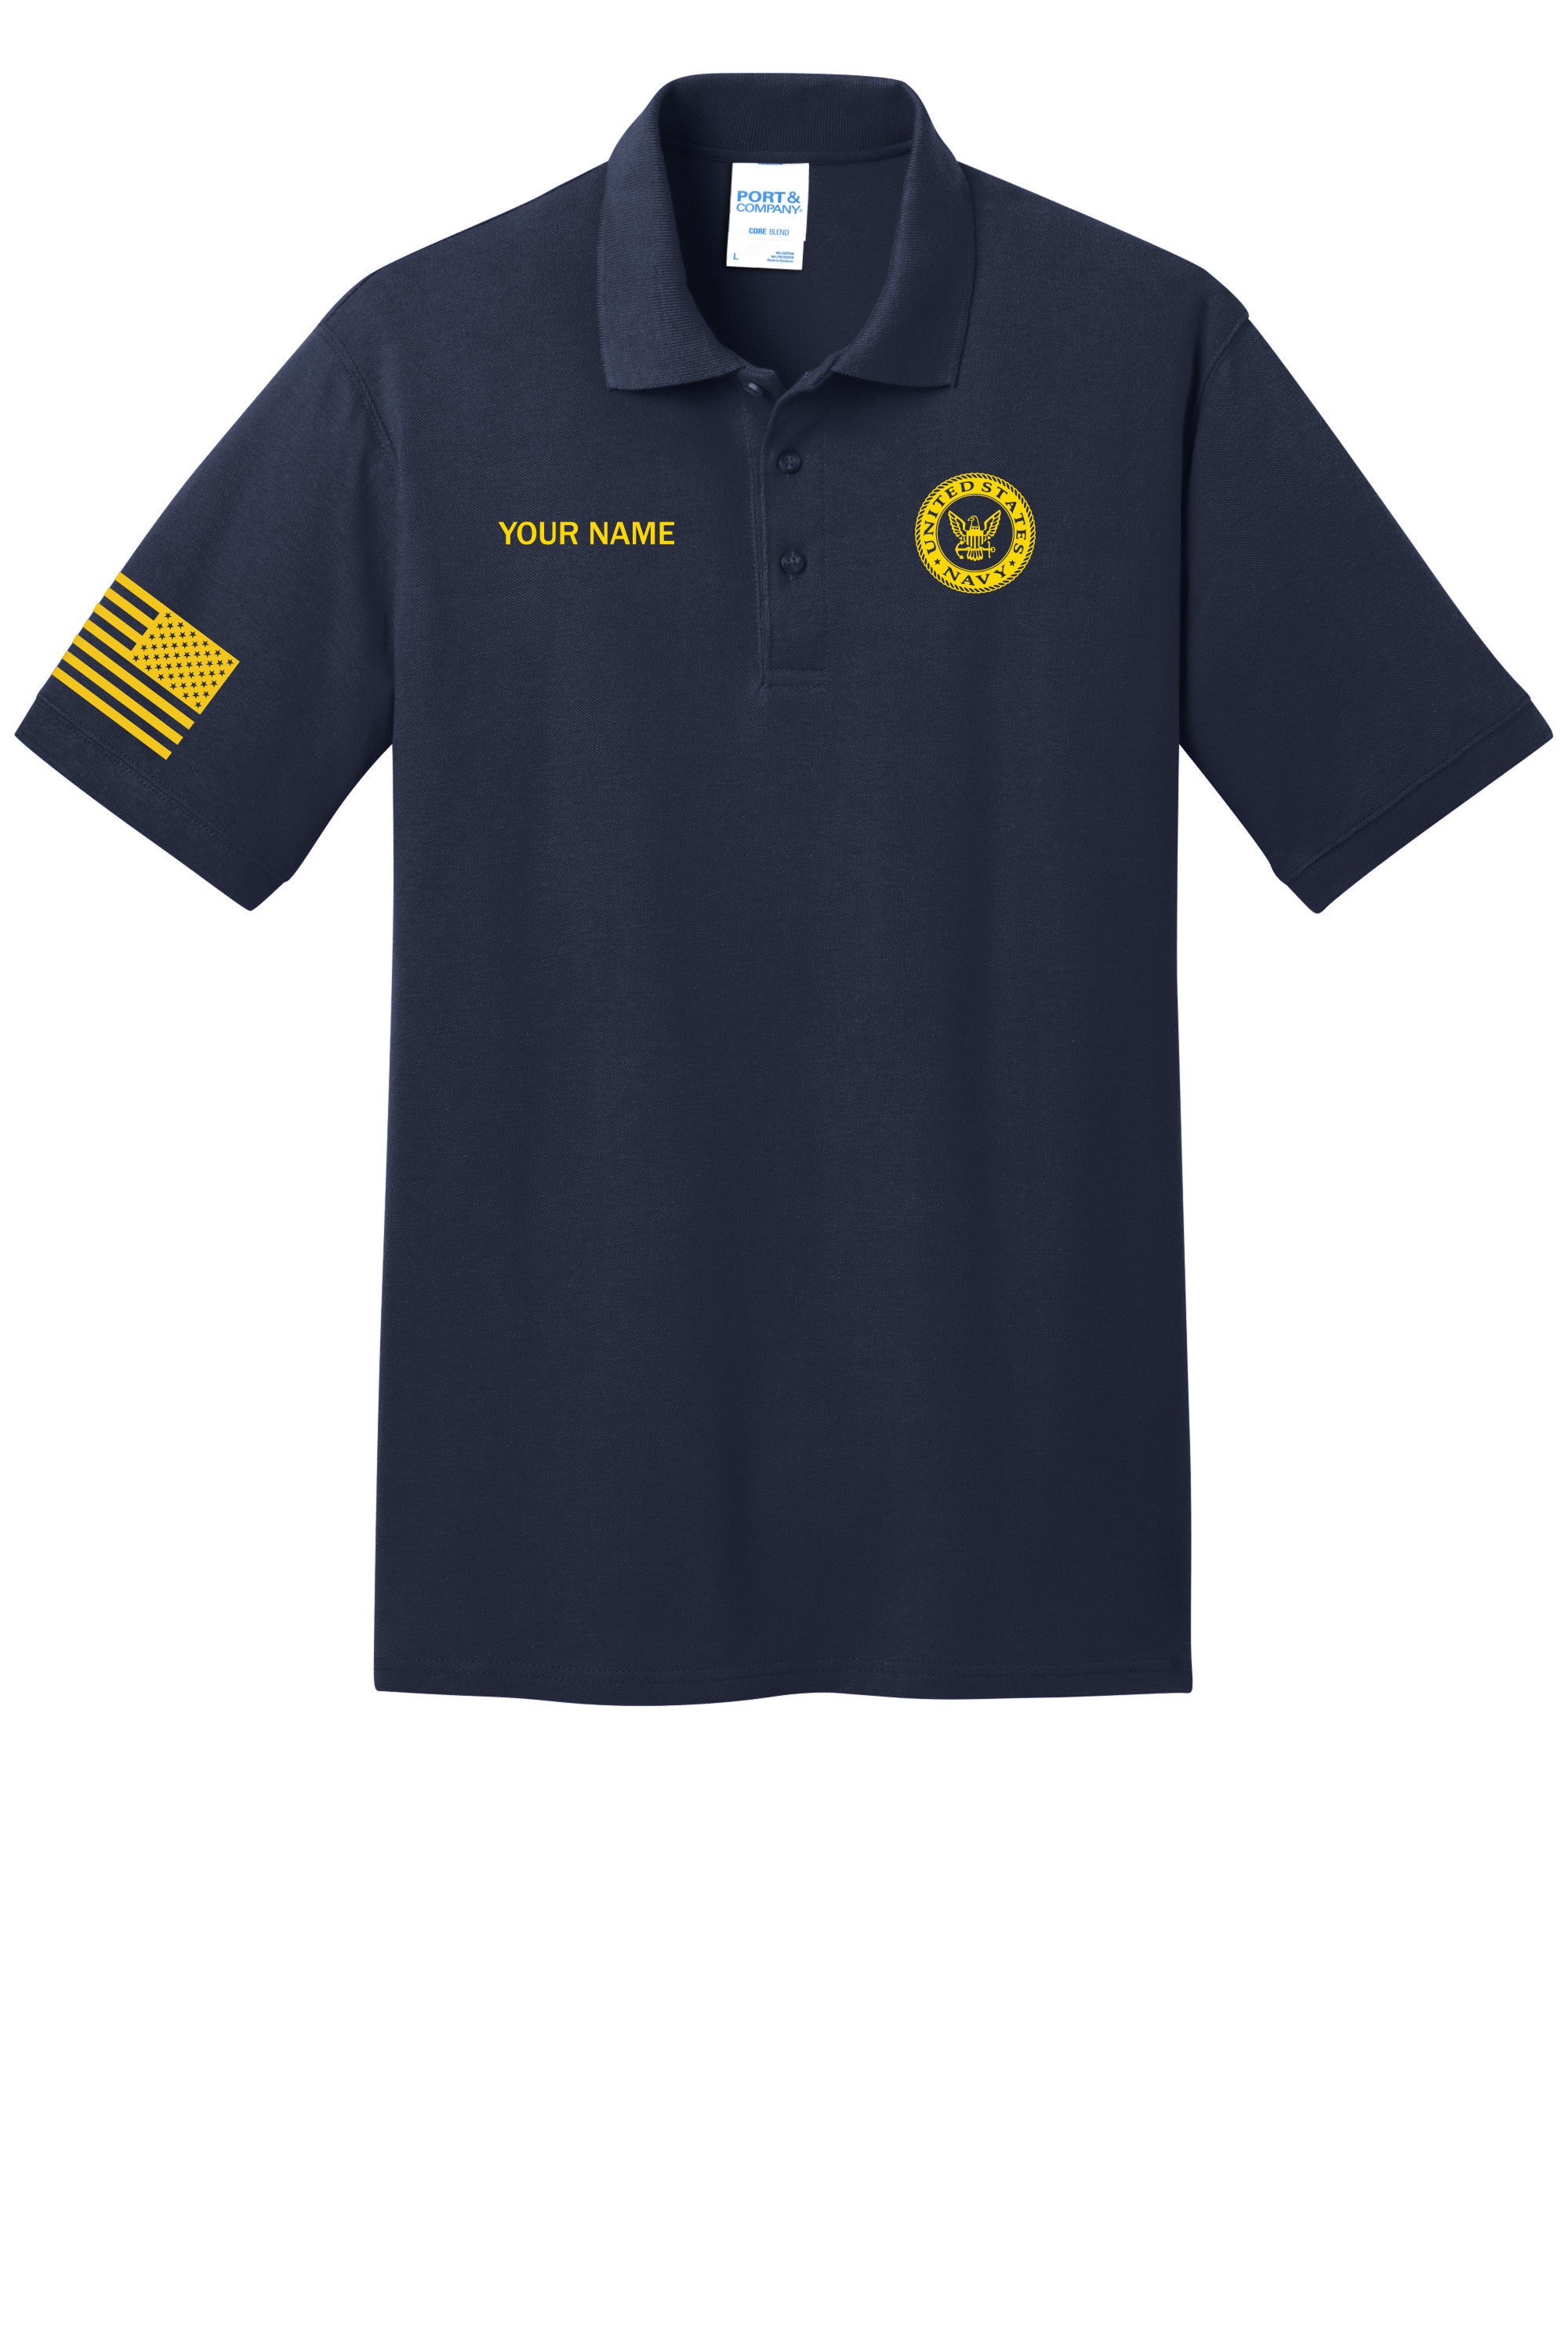 U.S. polo golf shirt. Military golf shirt. US Navy